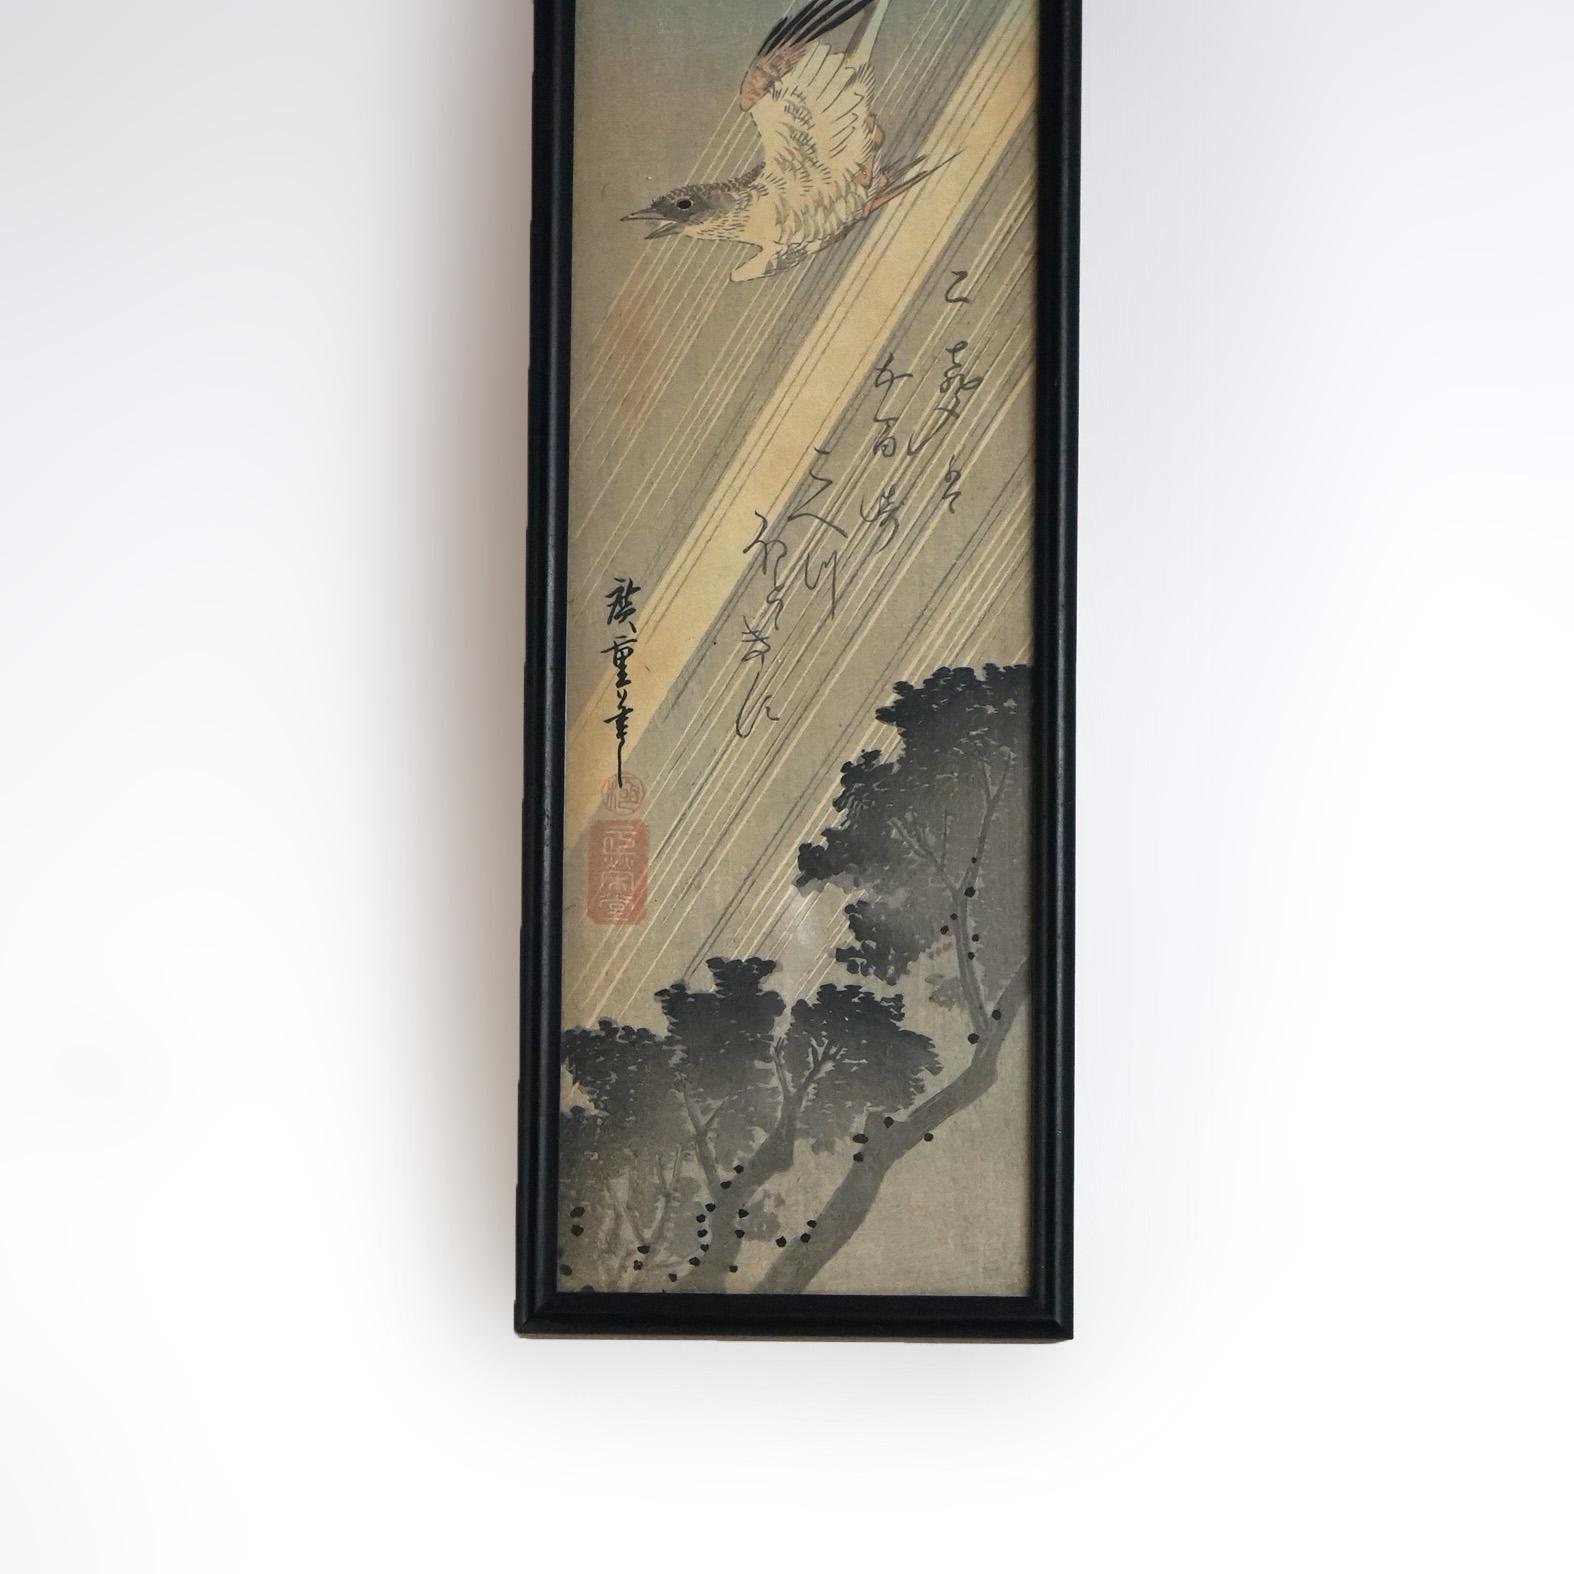 Japanese Woodblock Prints by Utagawa Hiroshige and Hiroaki Takahashi 20thC In Good Condition For Sale In Big Flats, NY